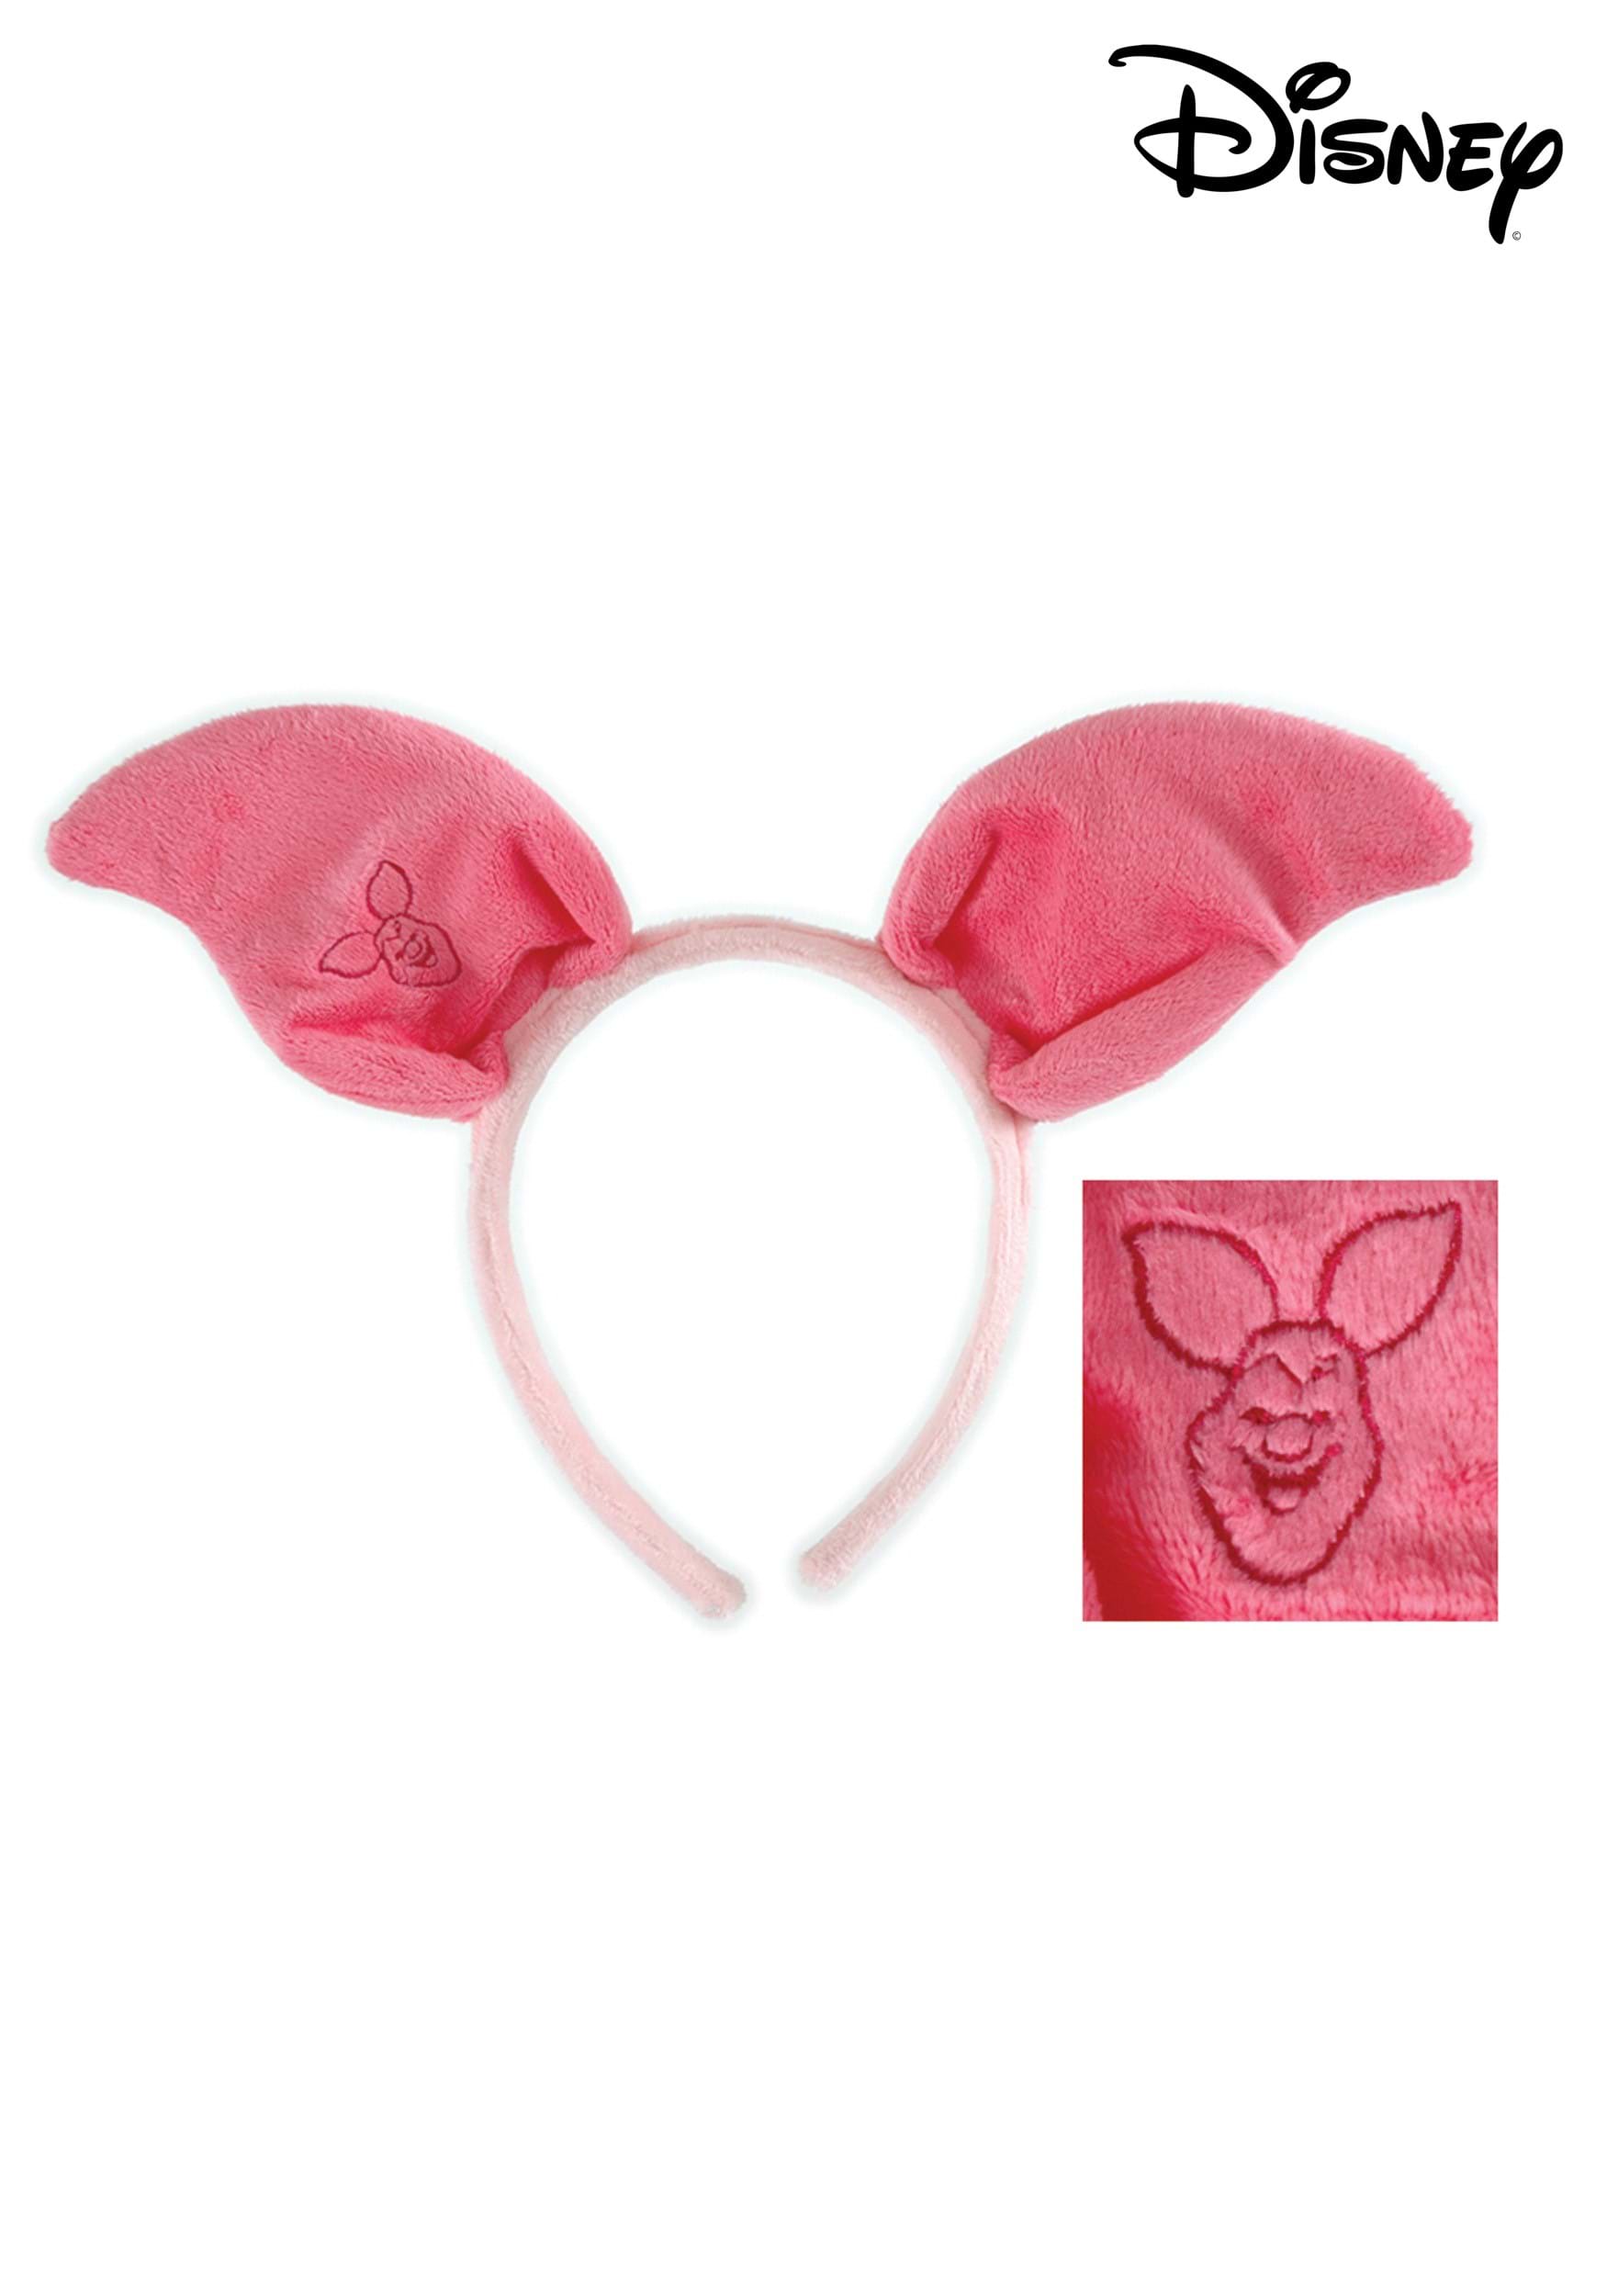 Piglet Ears Accessory